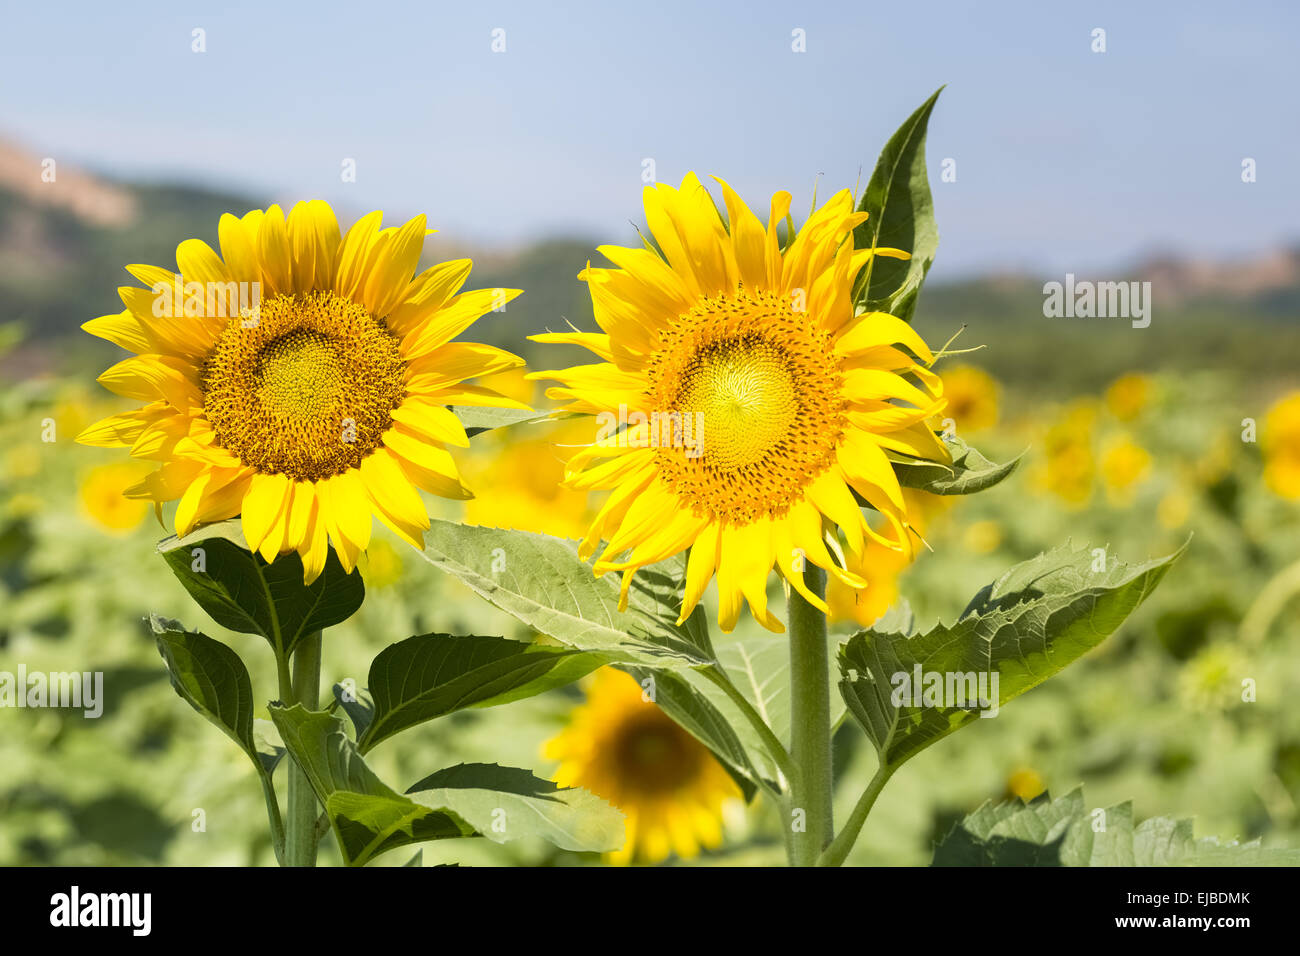 two sunflower flowers in full bloom Stock Photo